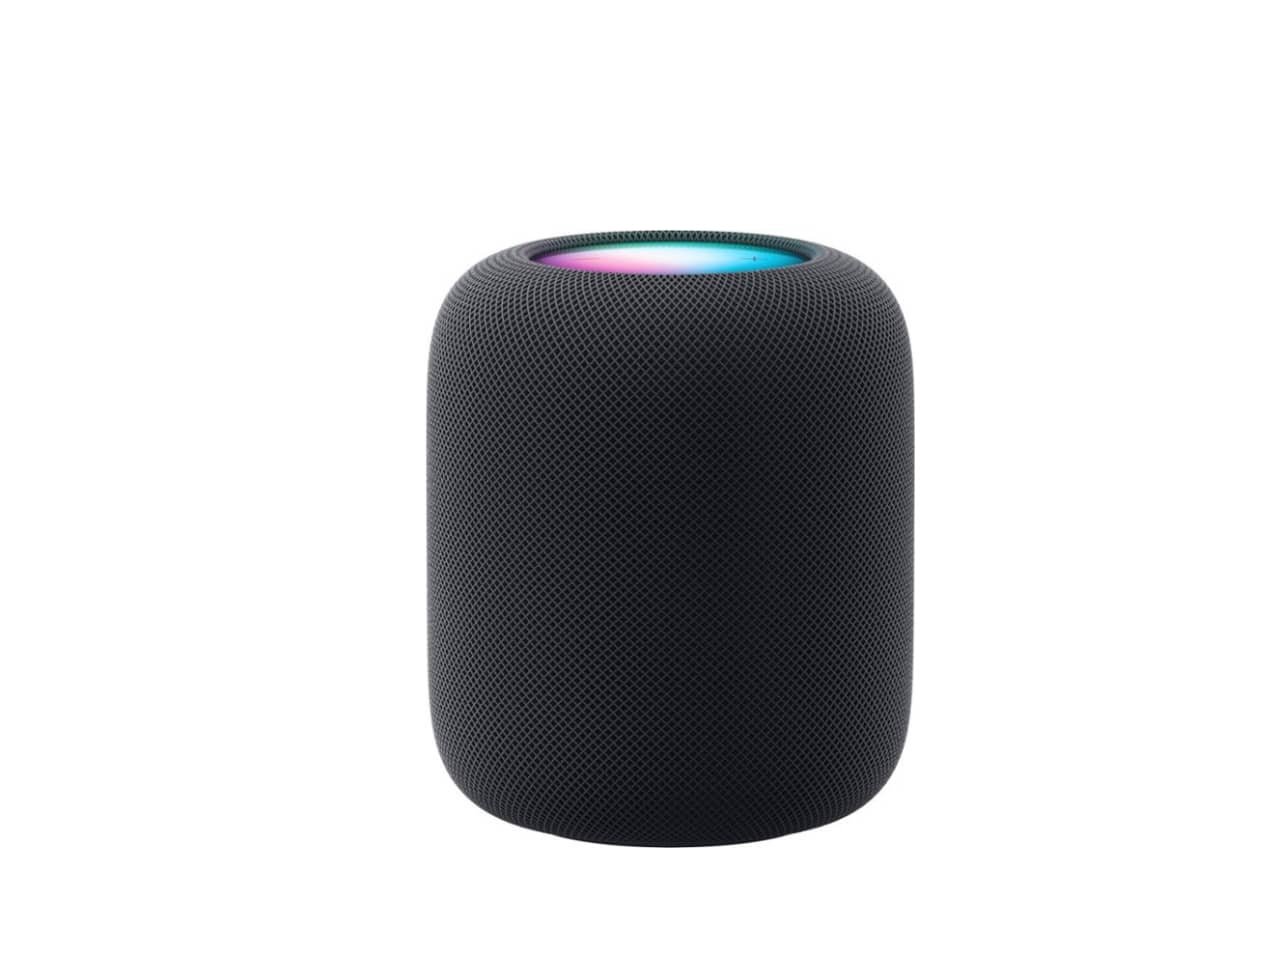 Apple HomePod: Should Get Apple's New Smart Speaker? Buy Side from